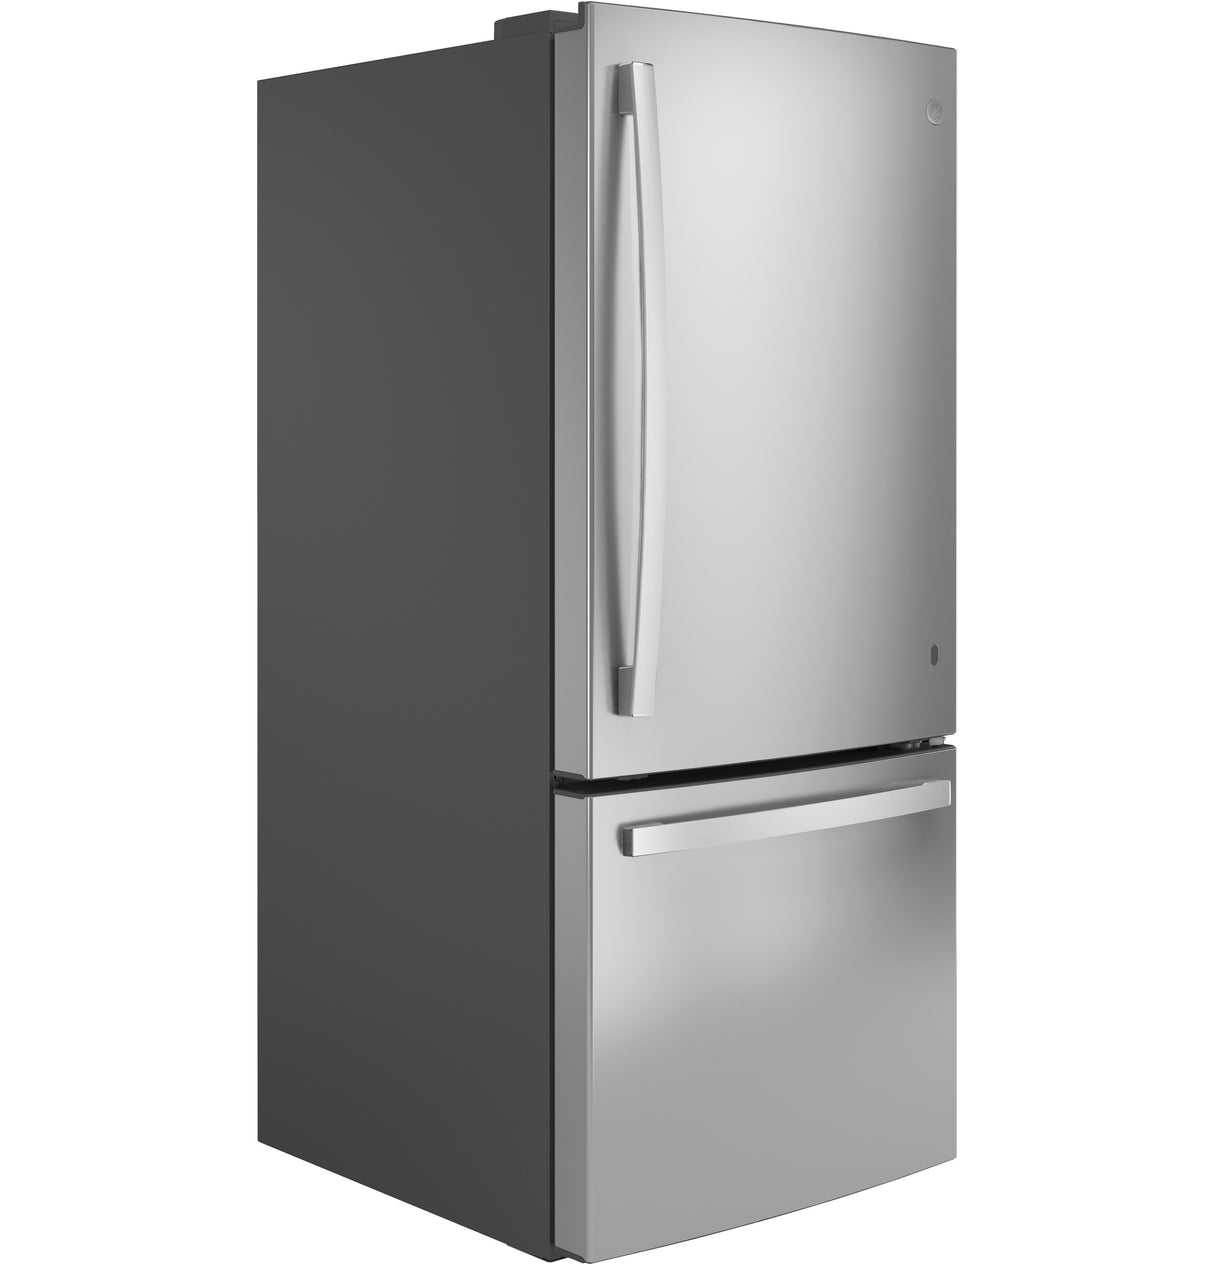 GE(R) ENERGY STAR(R) 21.0 Cu. Ft. Bottom-Freezer Refrigerator - (GDE21EYKFS)